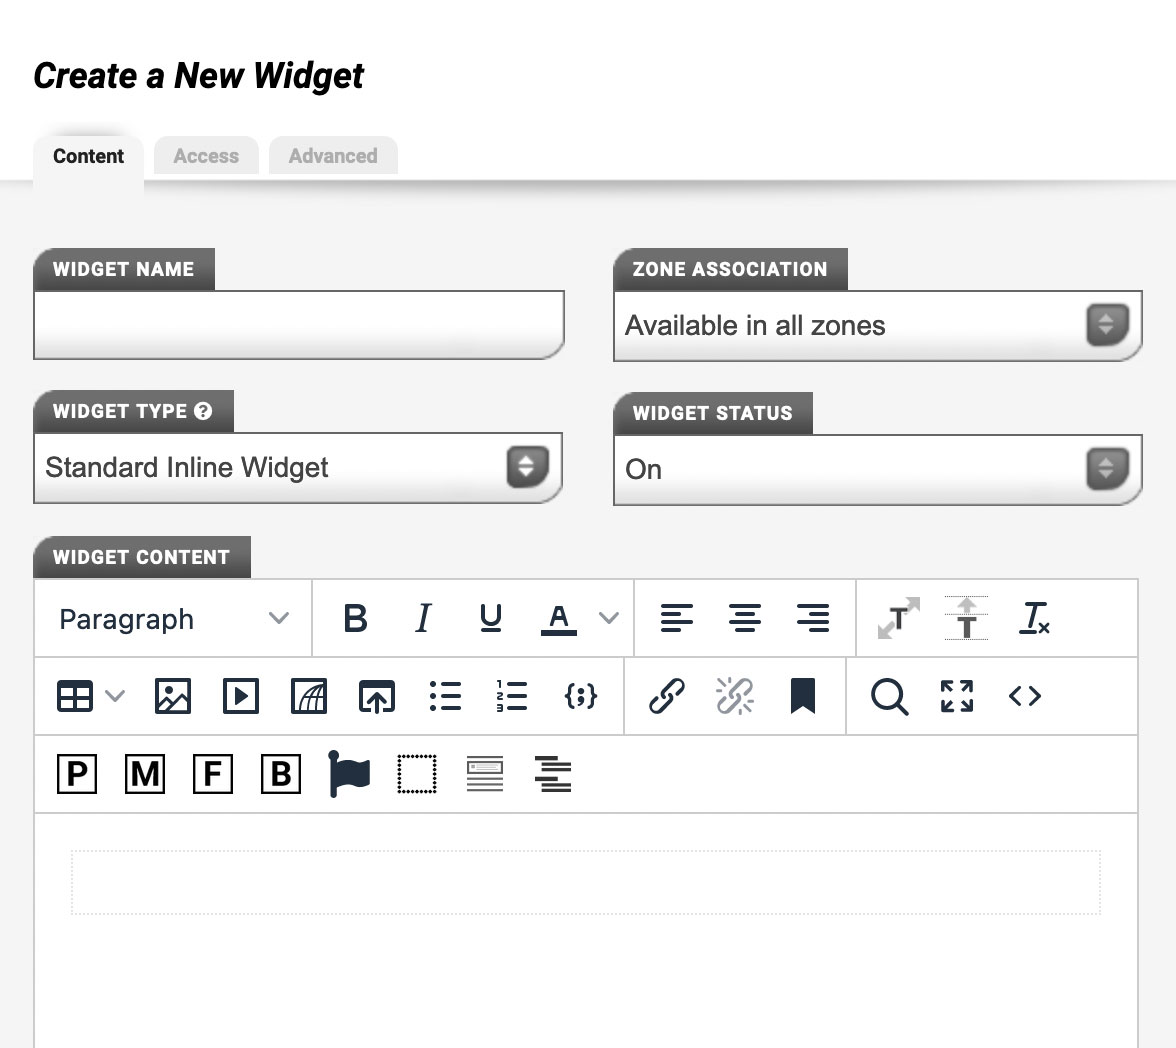 Create a new widget